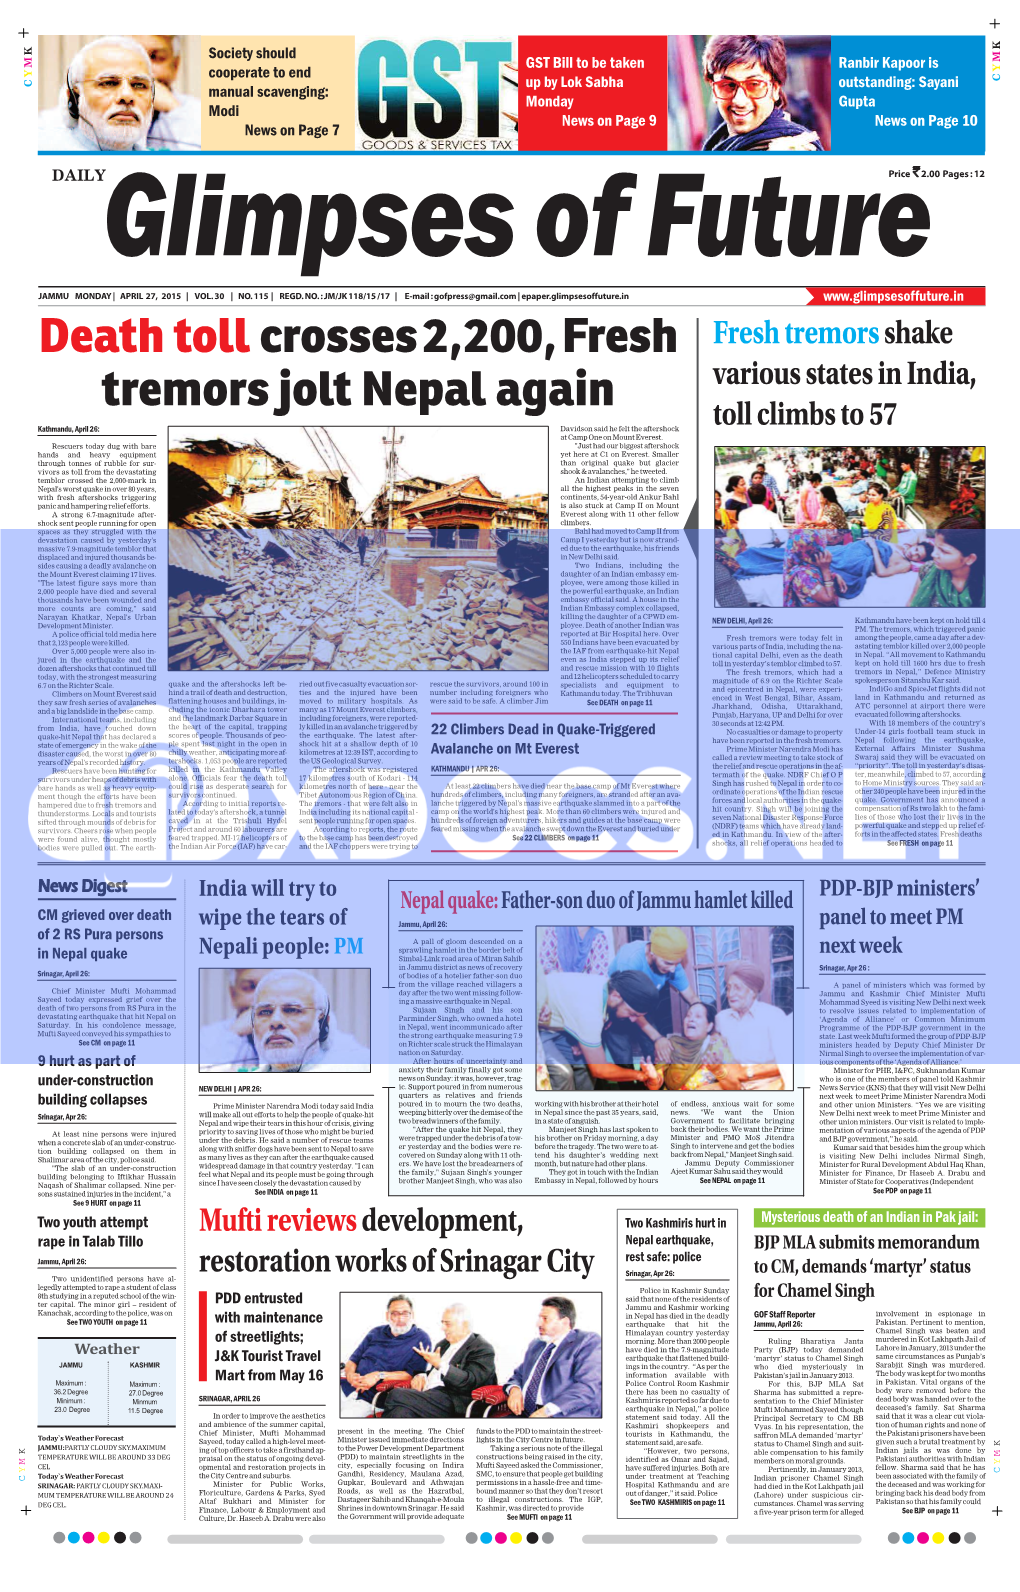 Death Toll Crosses 2,200, Fresh Tremors Jolt Nepal Again